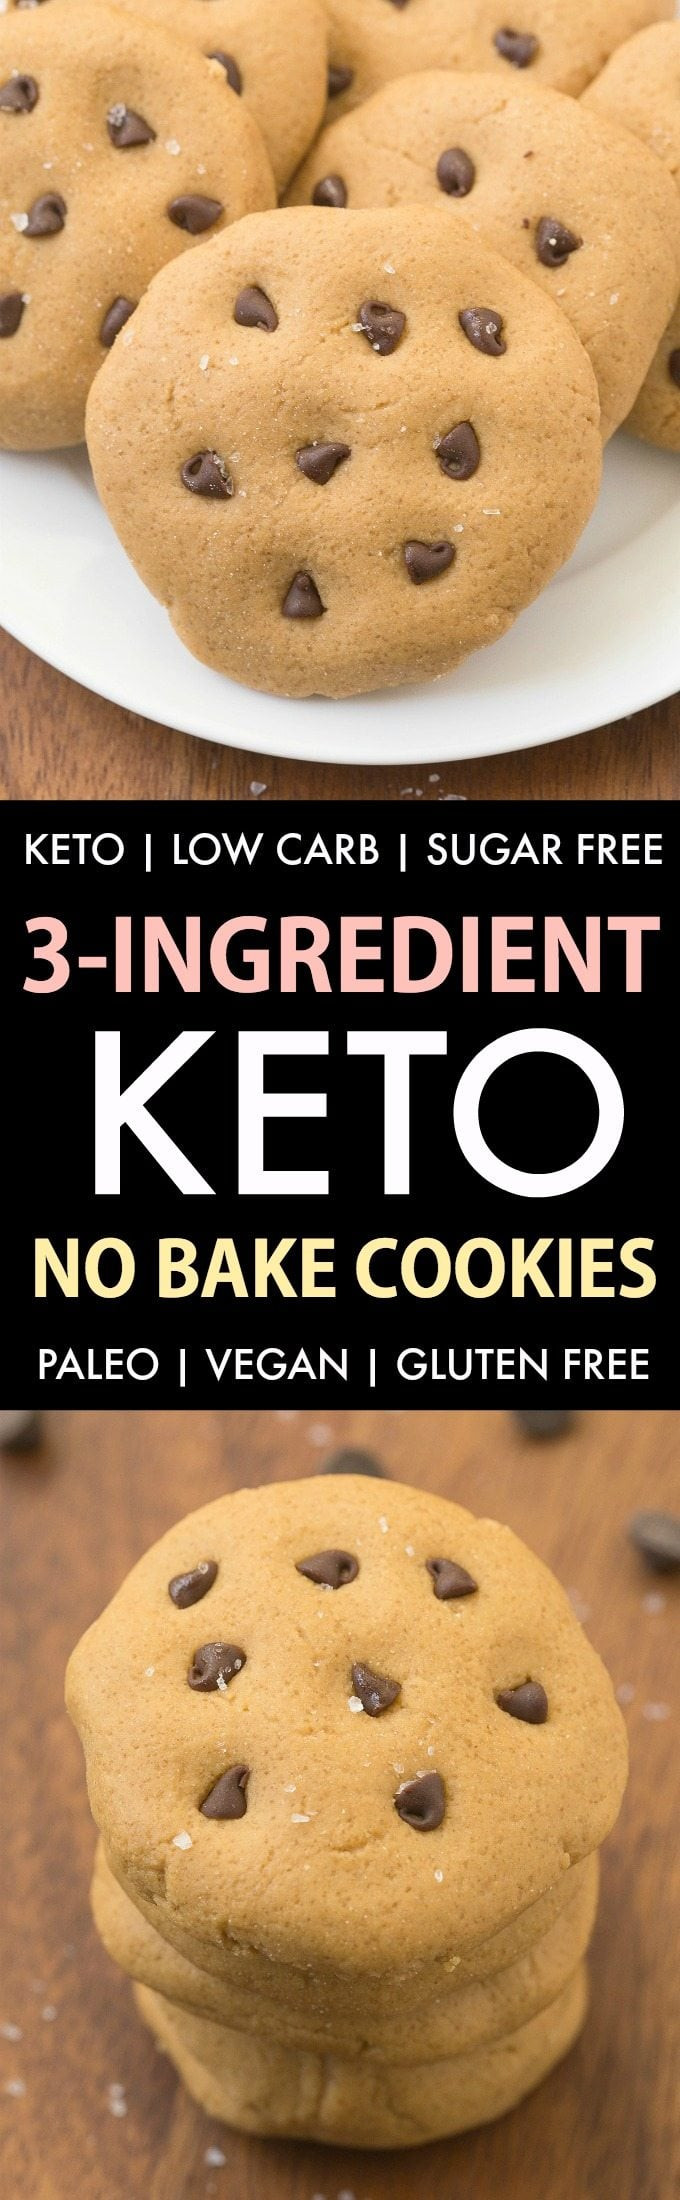 Keto Dessert Recipes 3 Ingredients No Bake
 Healthy 3 Ingre nt No Bake Paleo Protein Cookies